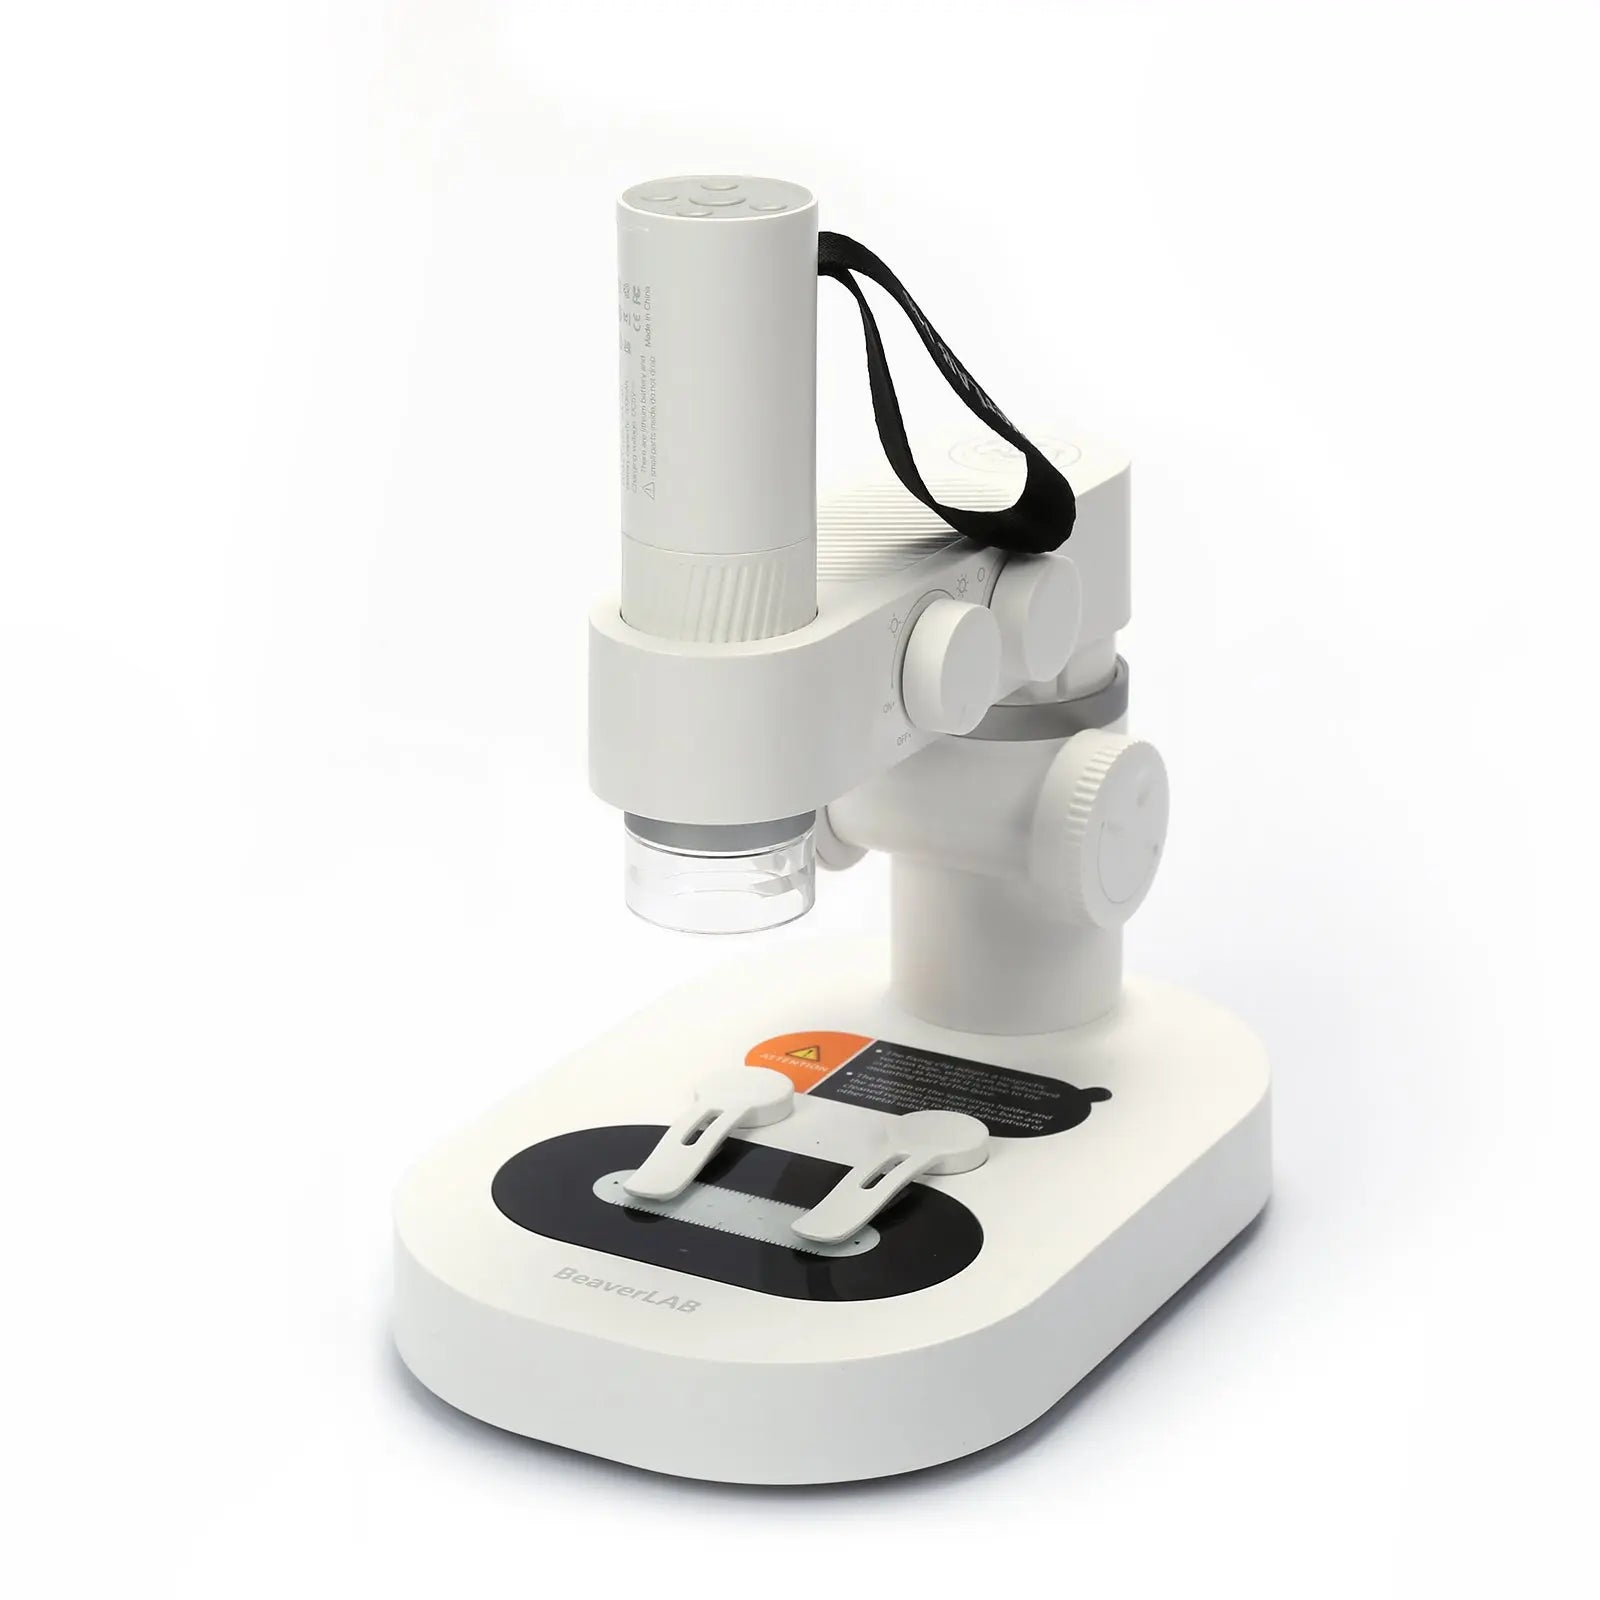 BeaverLAB M1 Smart Microscope High-Tech Educational Tool6